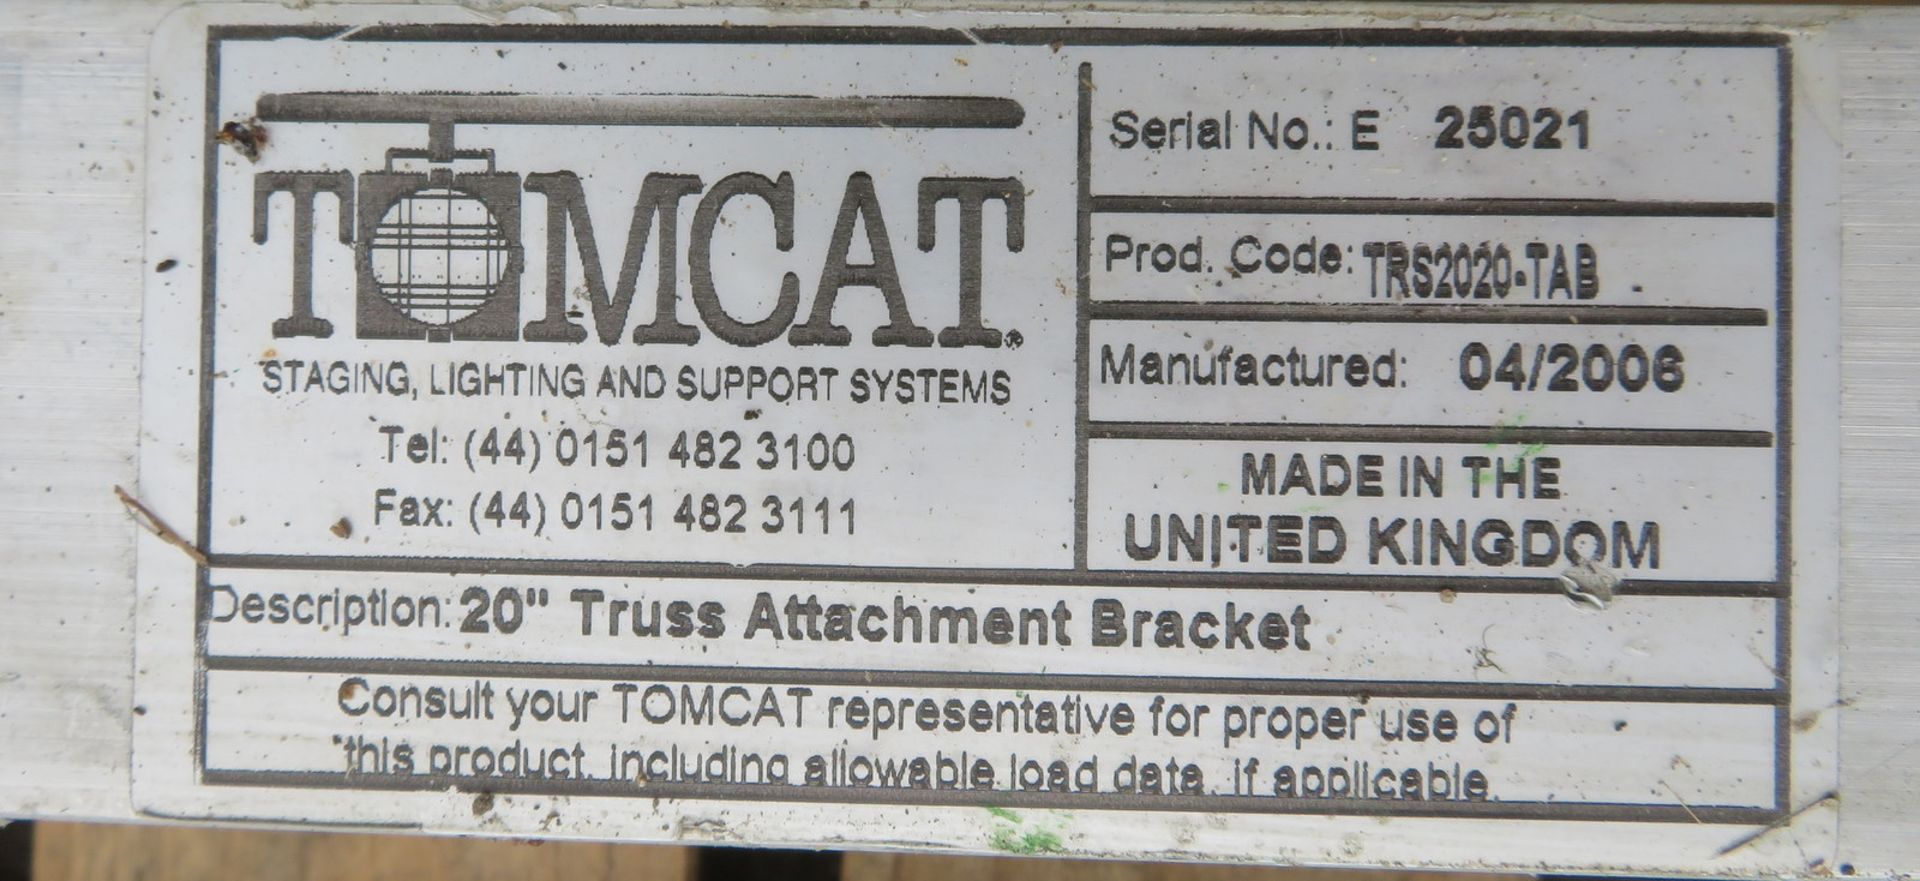 15x Tomcat 20" truss attachment bracket - Image 7 of 7